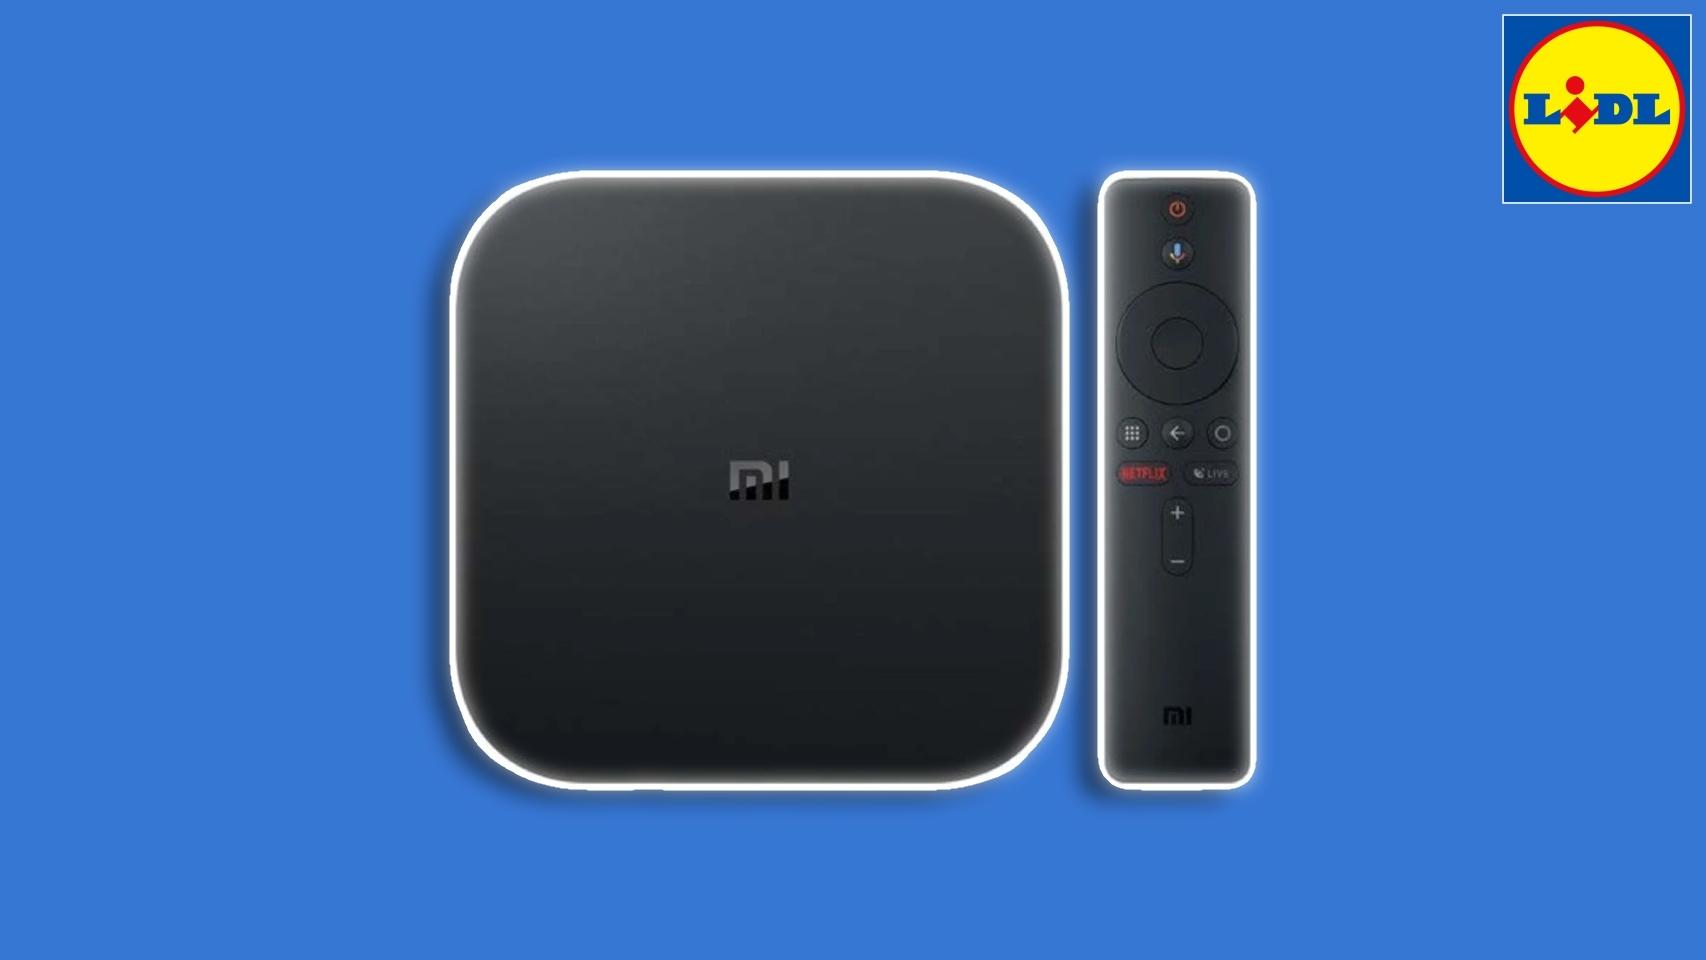 Probamos el 'Chromecast' español que convierte en inteligente tu televisor